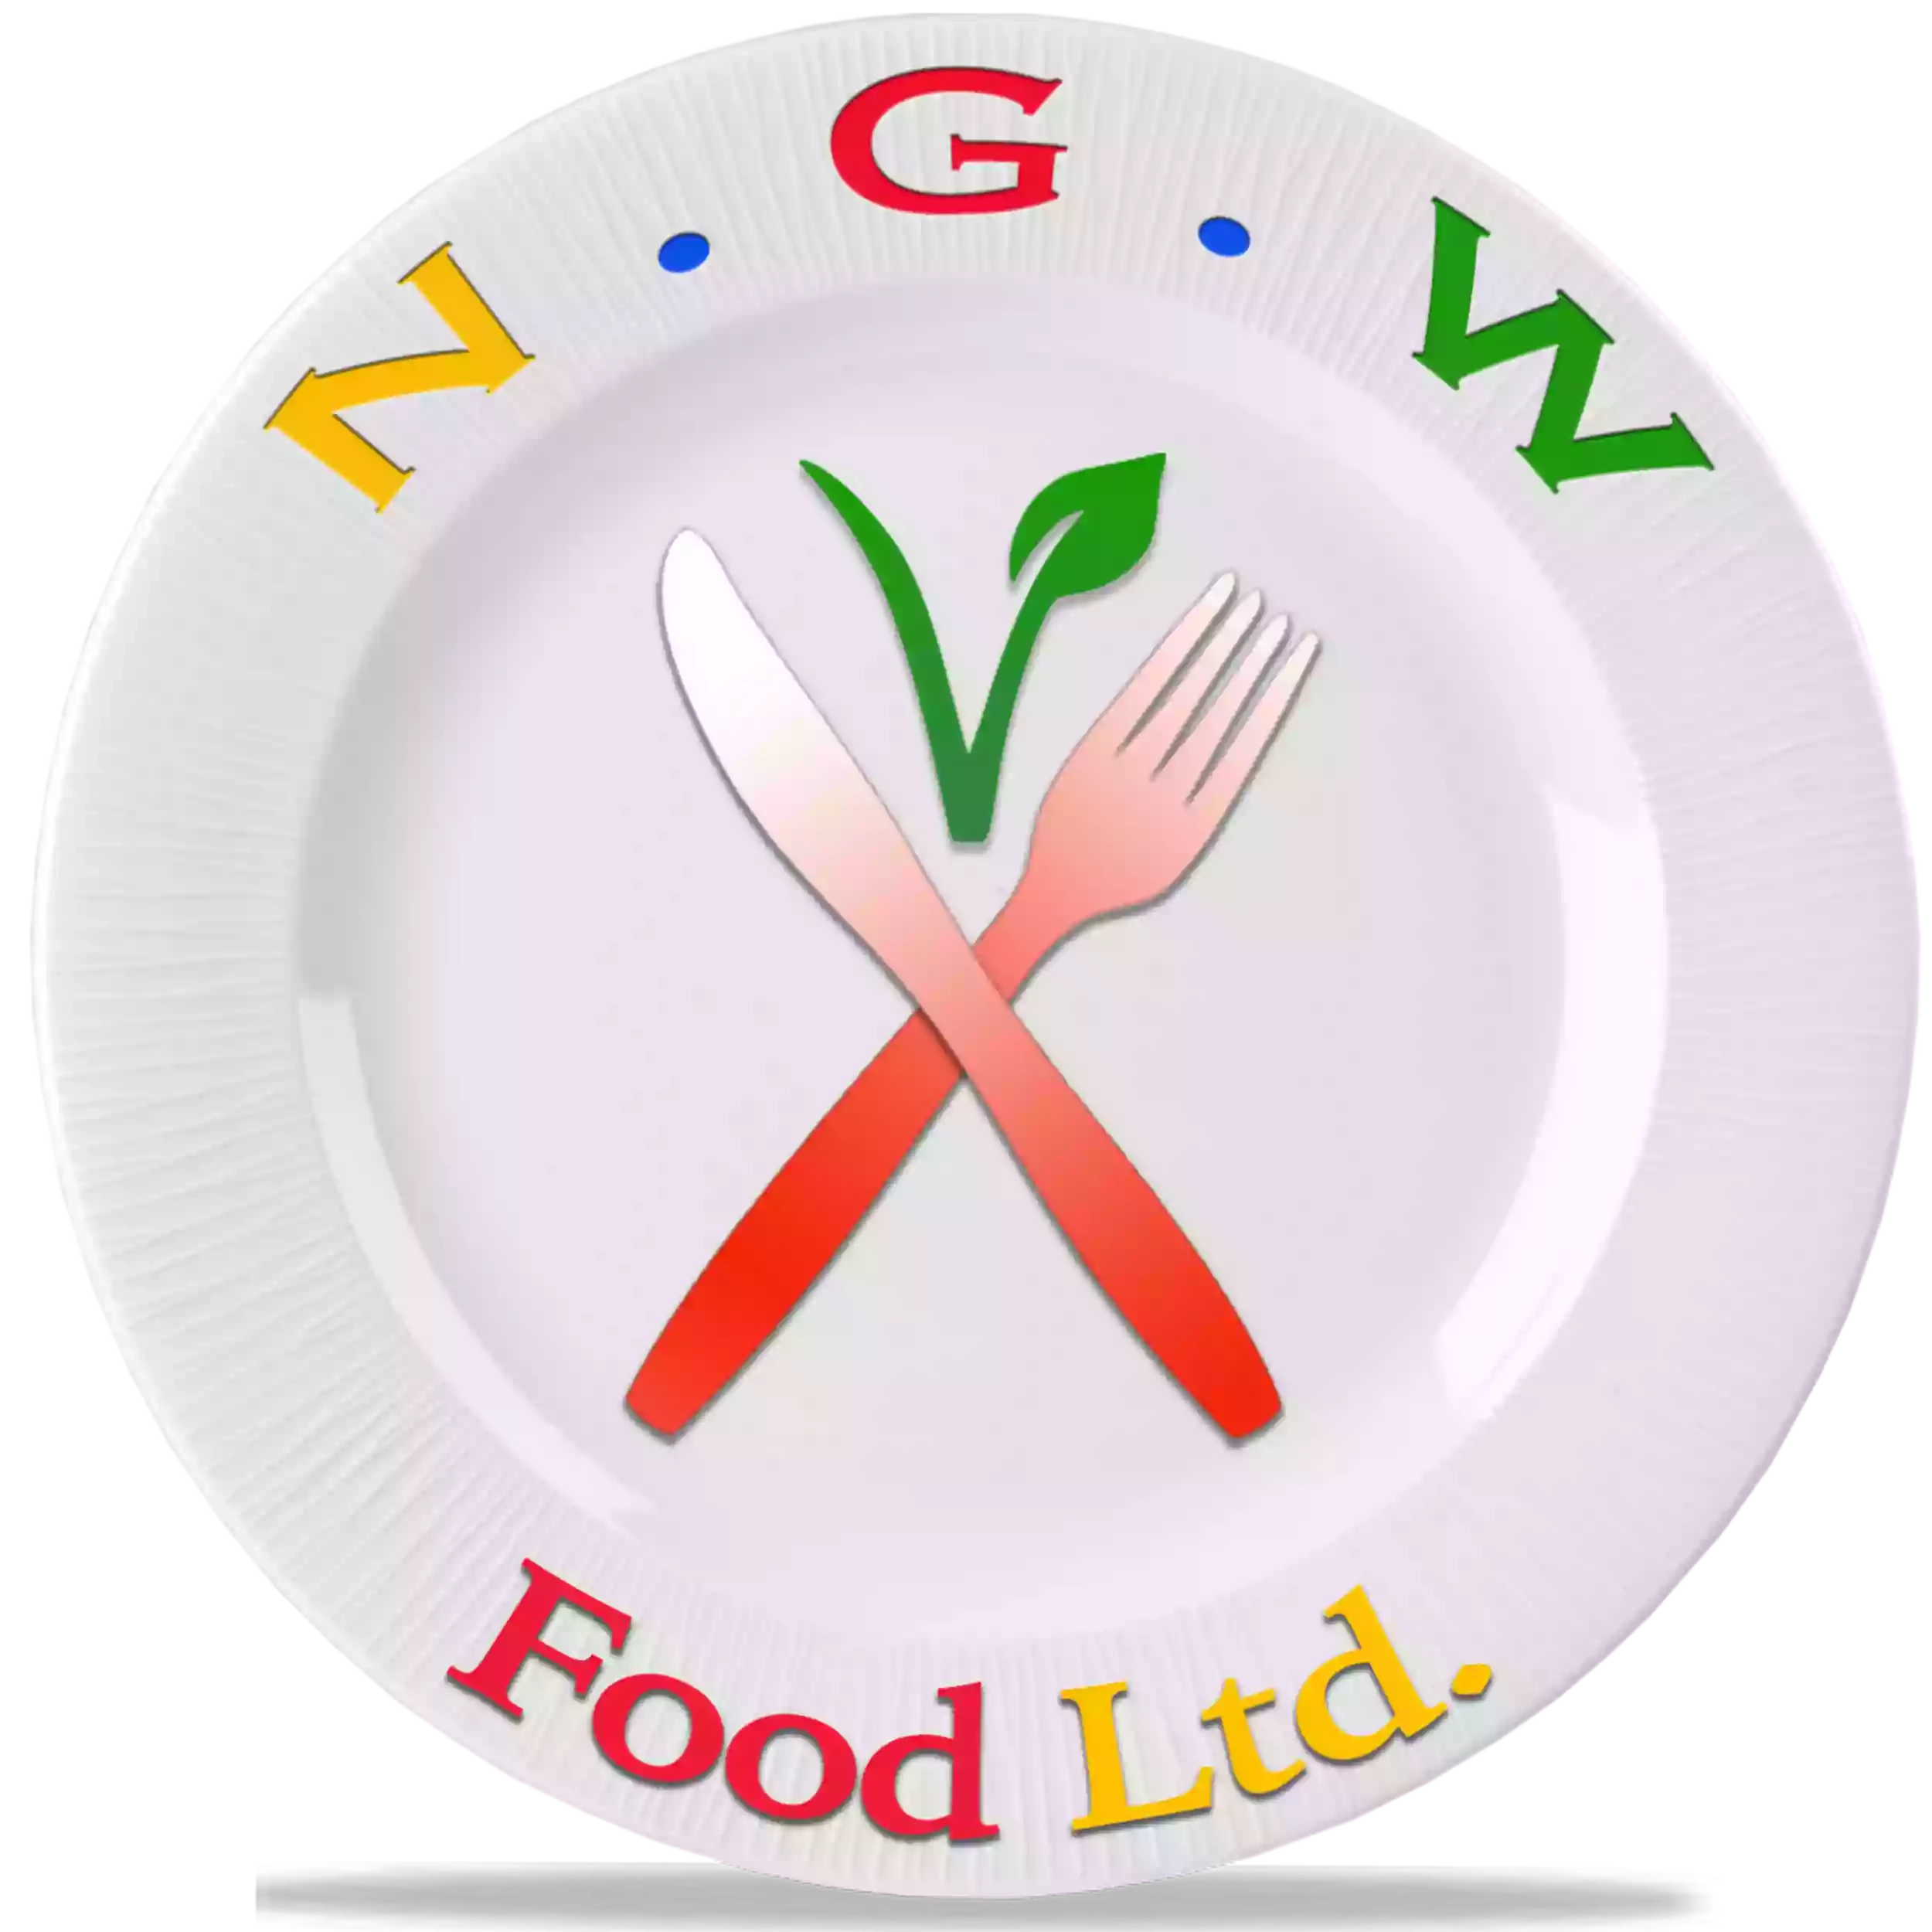 N.G.W. Food Ltd - Falafel Wraps